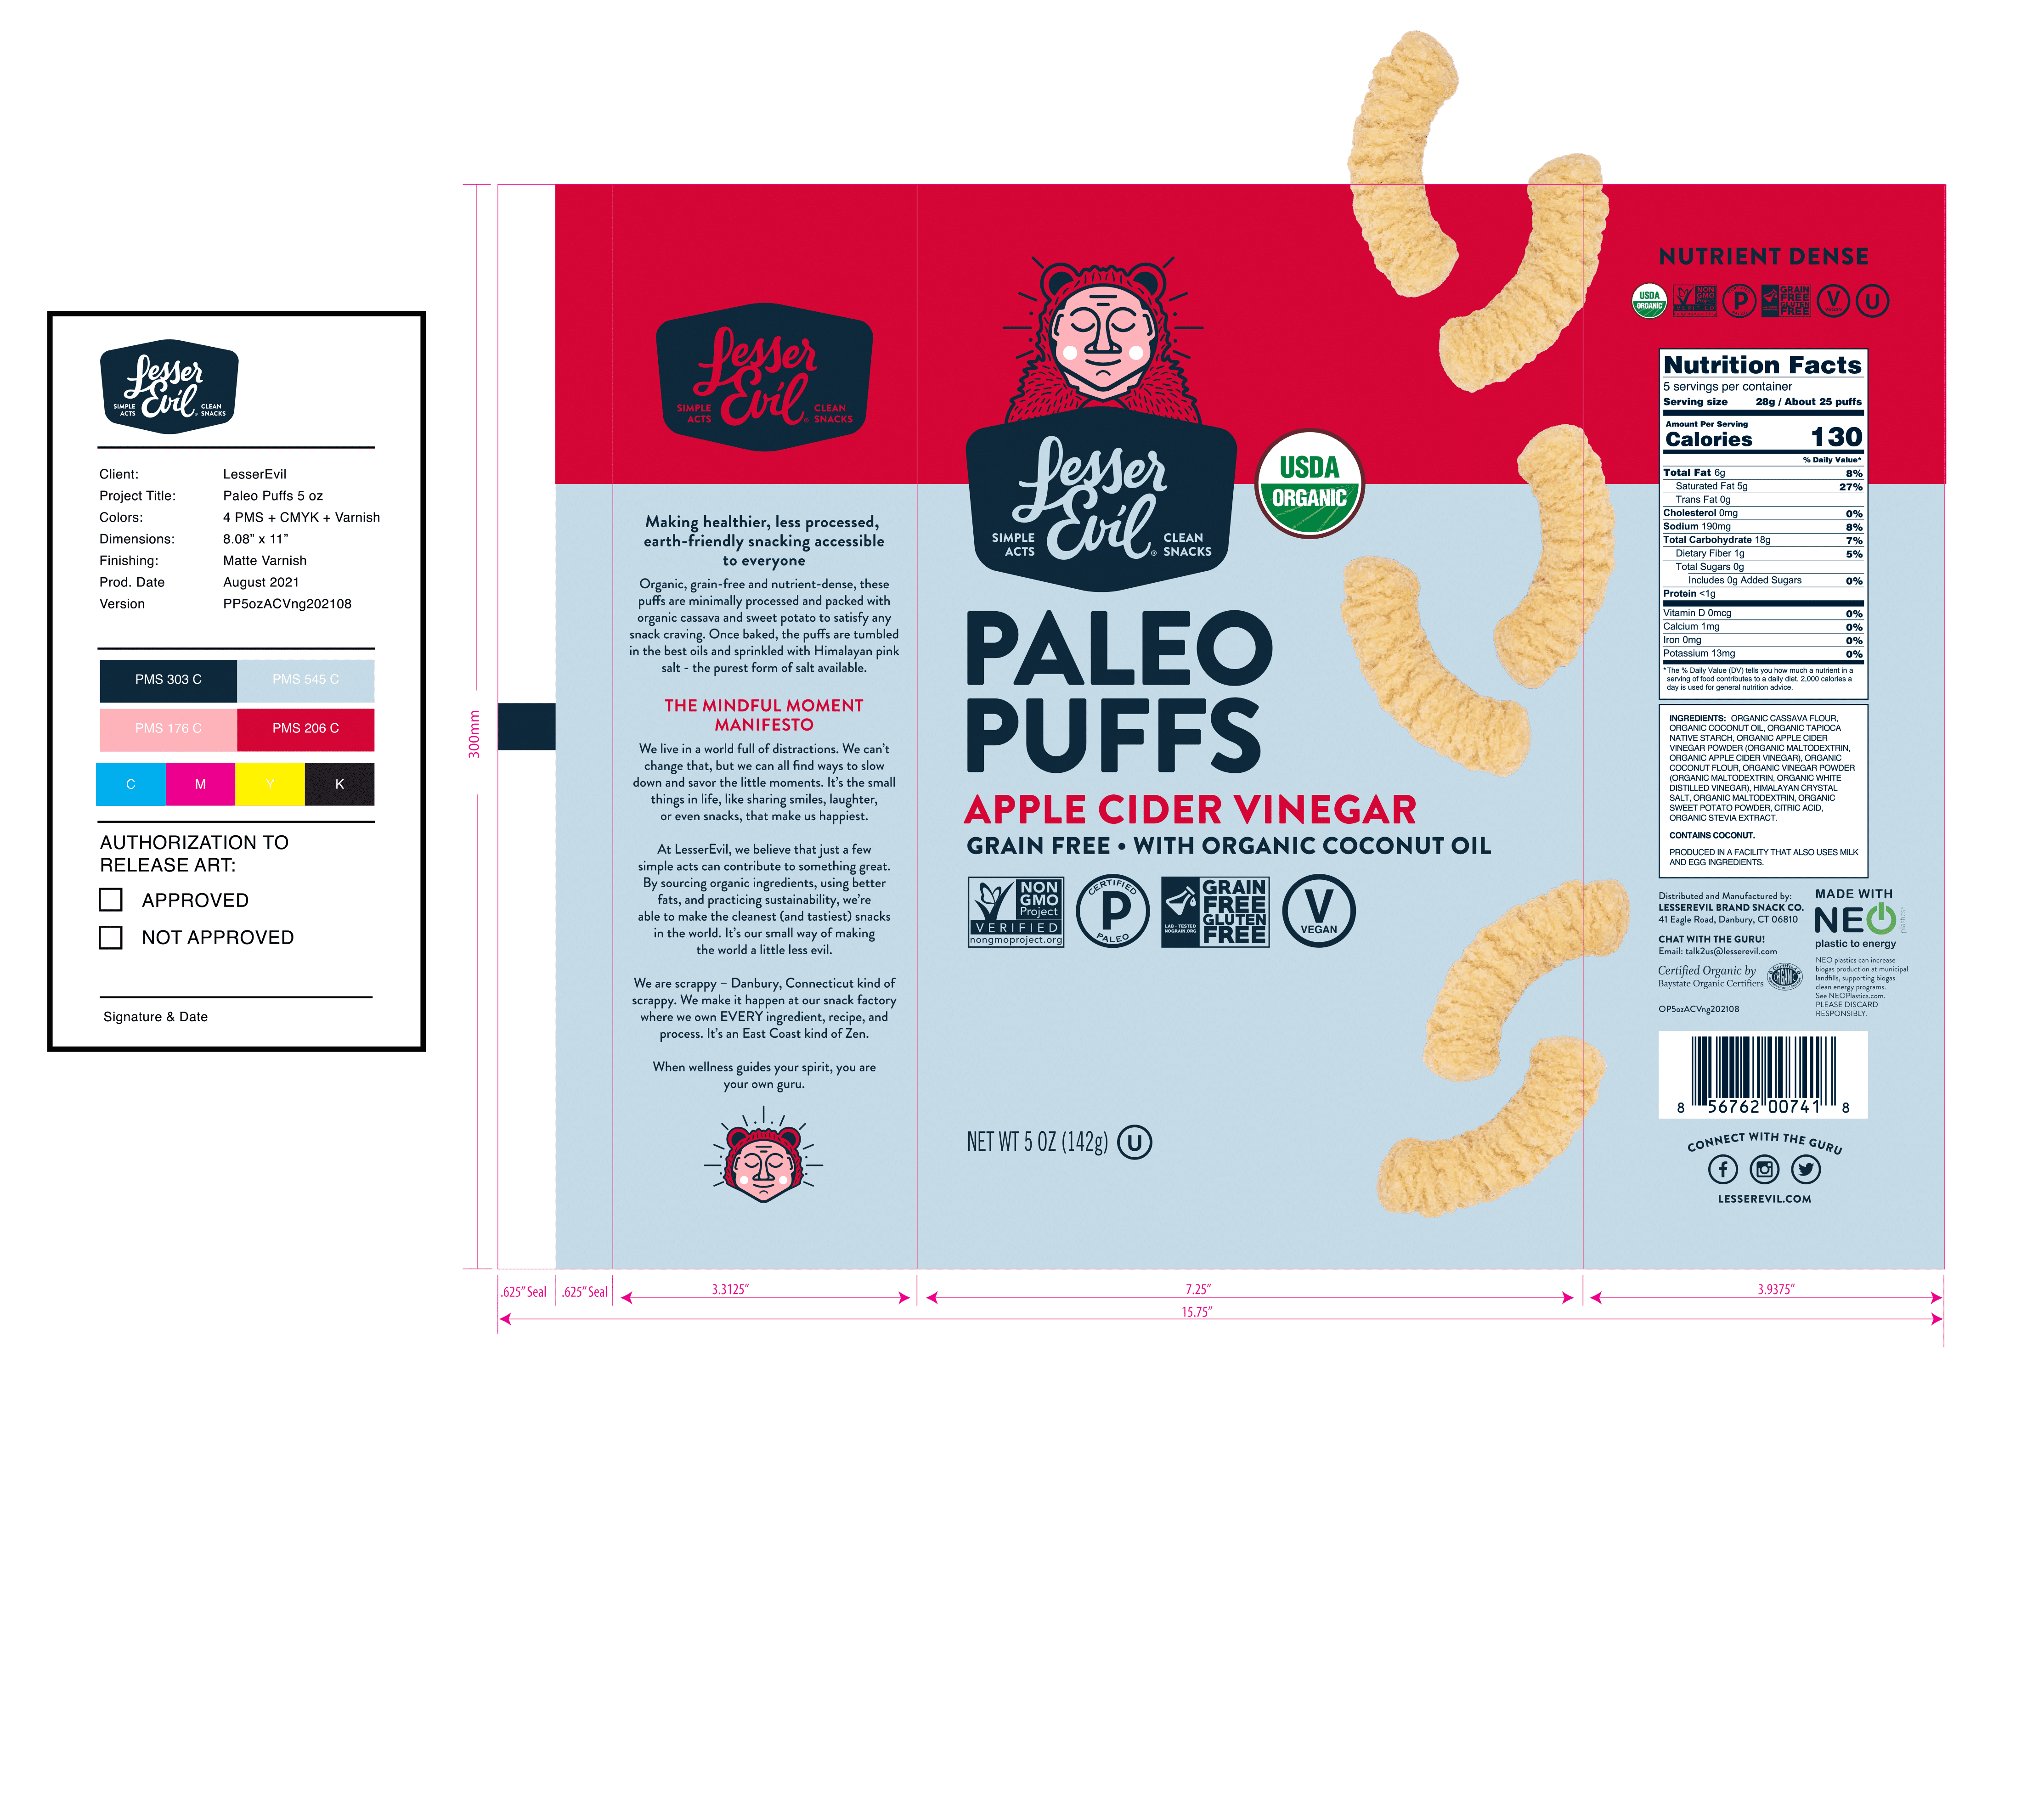 LesserEvil, Paleo Puffs Apple Cider Vinegar 9 units per case 5.0 oz Product Label